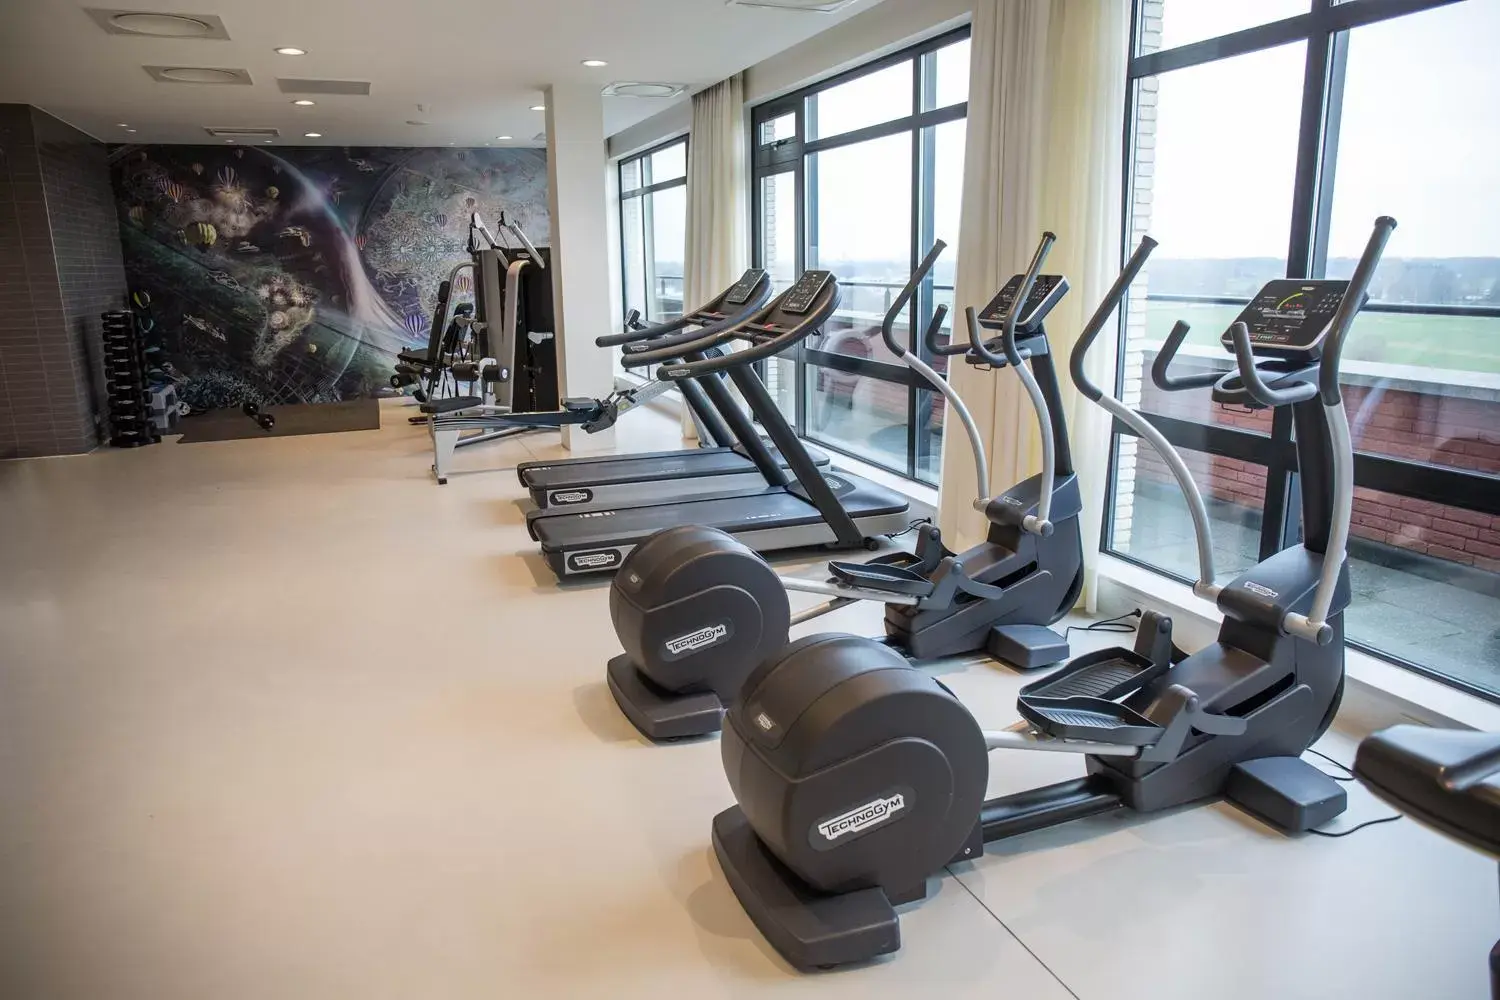 Fitness centre/facilities, Fitness Center/Facilities in Van Der Valk Hotel Zwolle